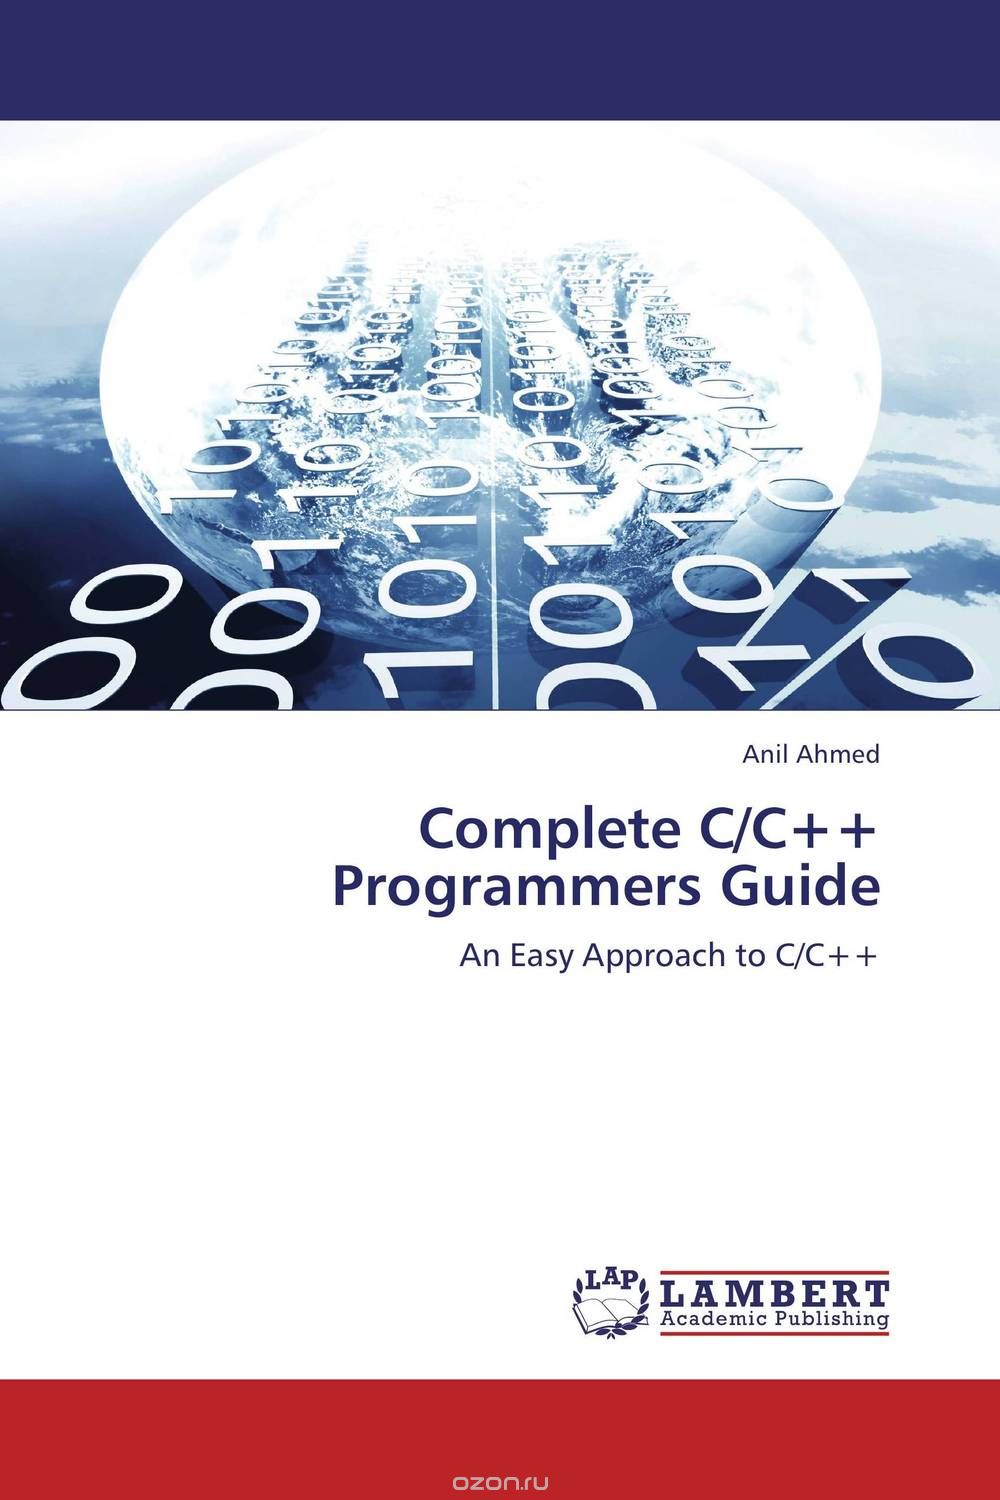 Скачать книгу "Complete C/C++ Programmers Guide"